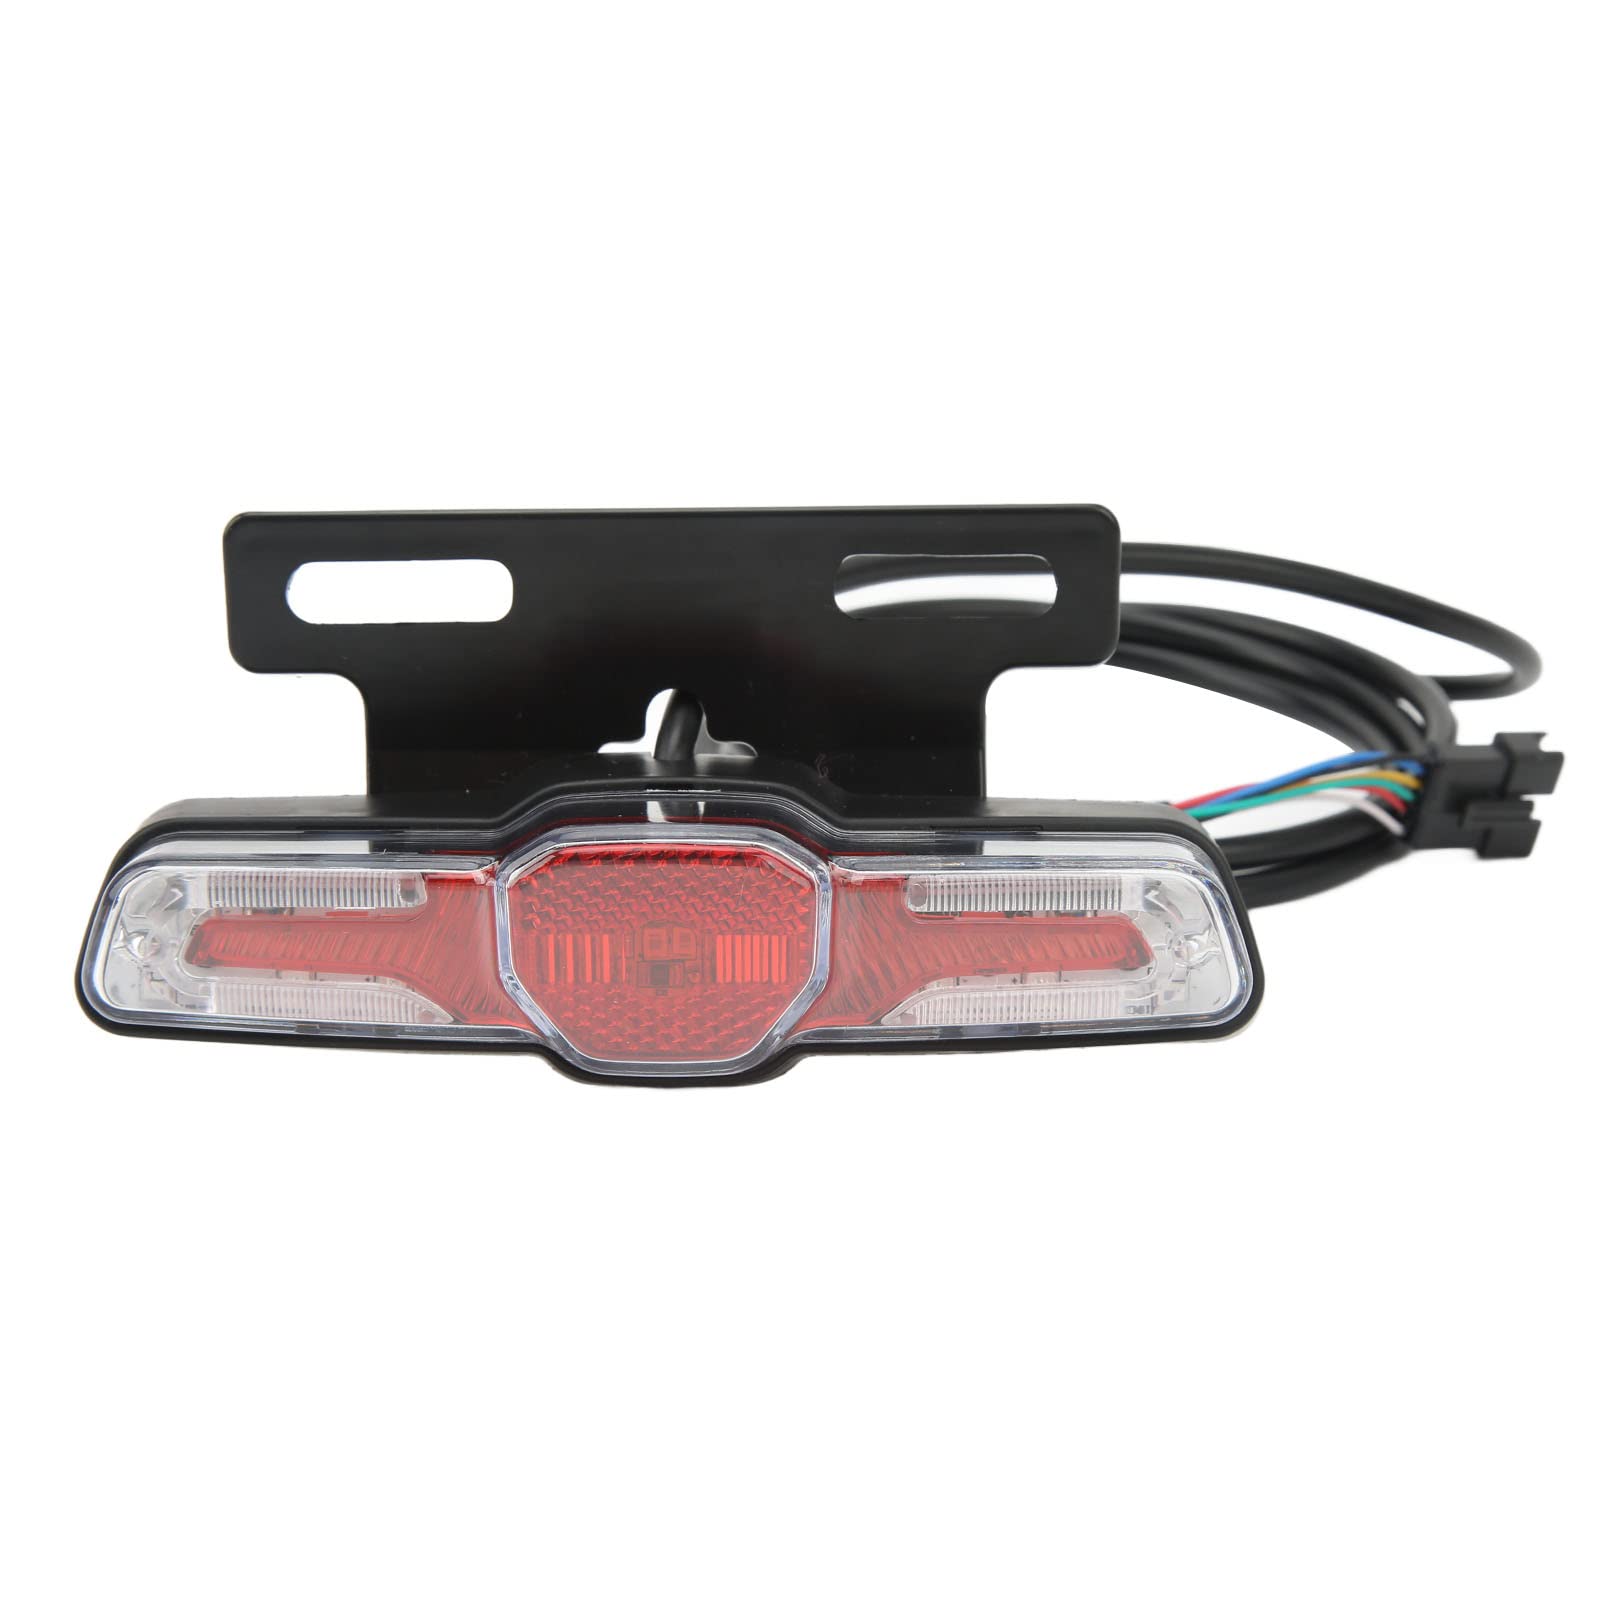 TT-EBIKE LED Taillight and Headlight 12-80V Super Taillight Electric Bike Headlight